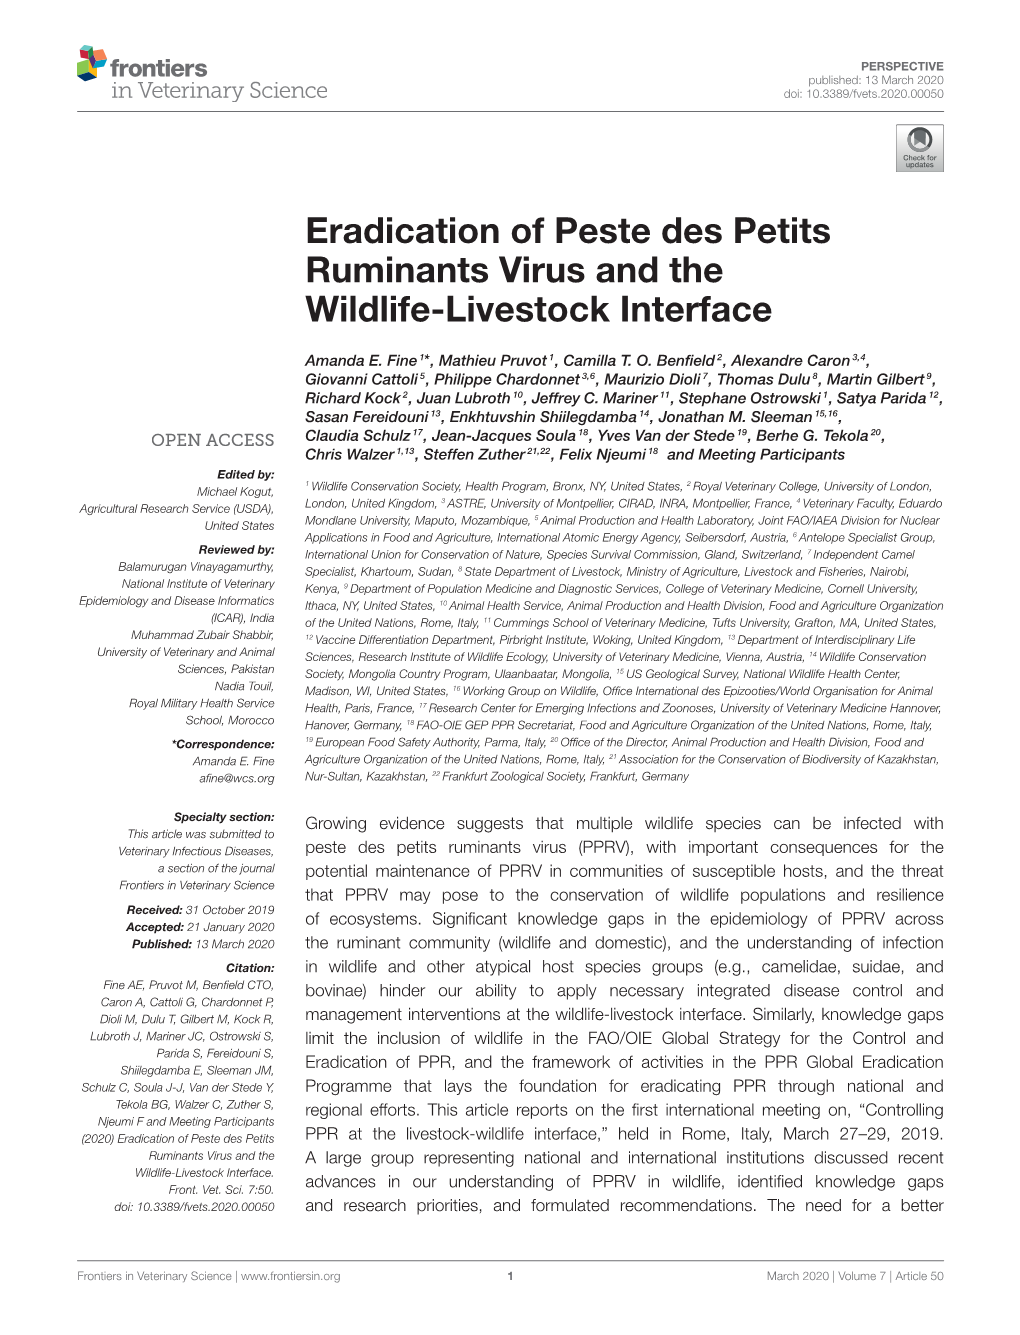 Eradication of Peste Des Petits Ruminants Virus and the Wildlife-Livestock Interface